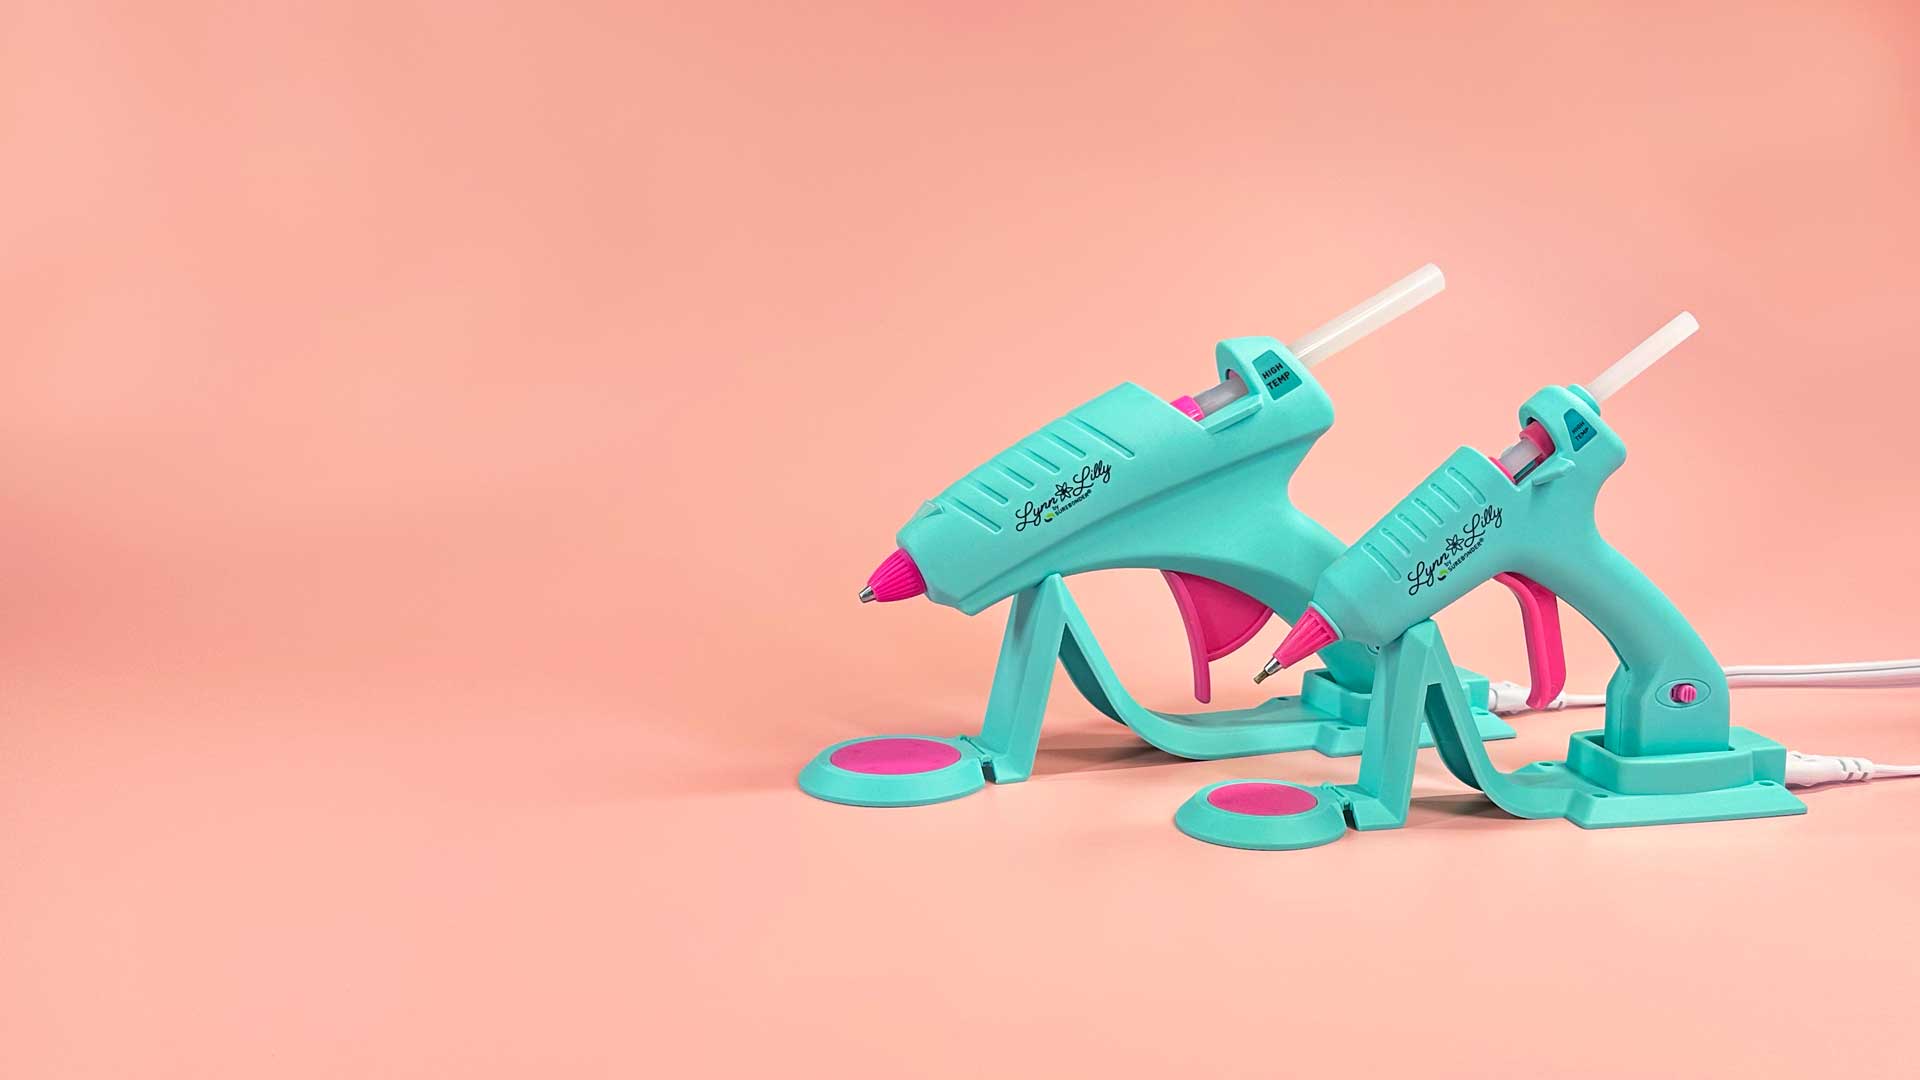 Lynn Lilly glue guns sitting together on a pink background